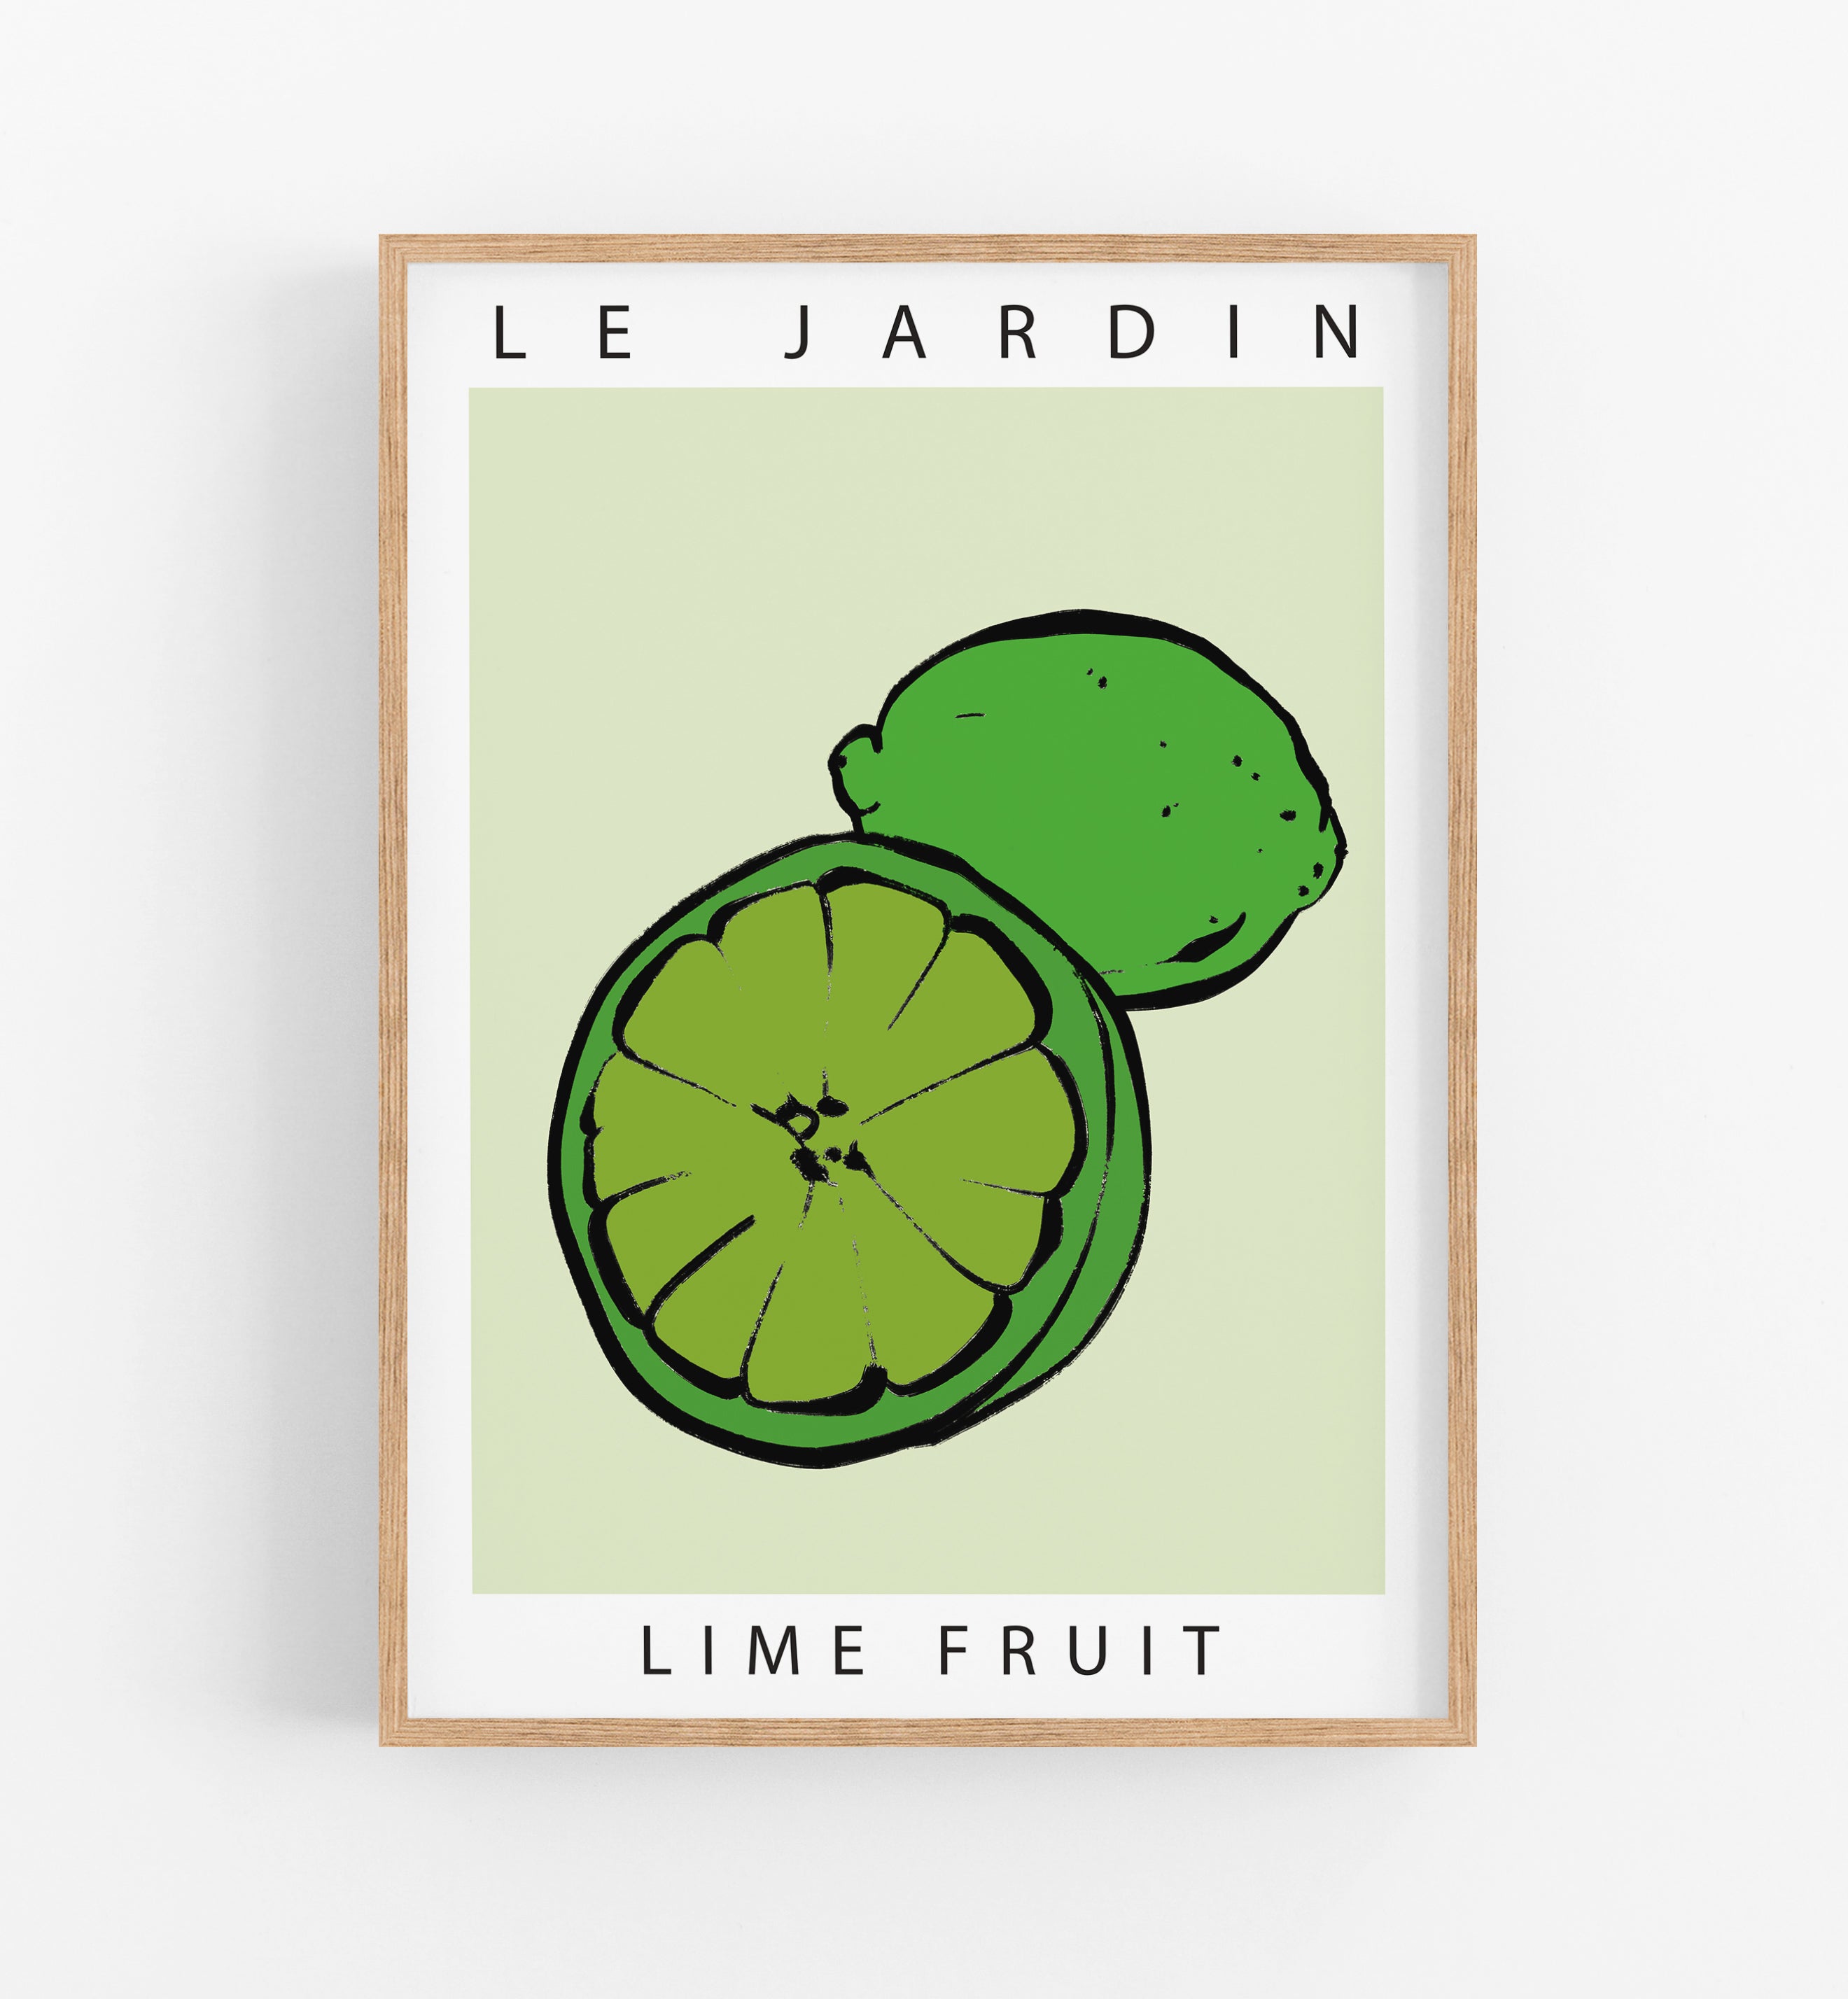 Le Jardin Fruit Lime